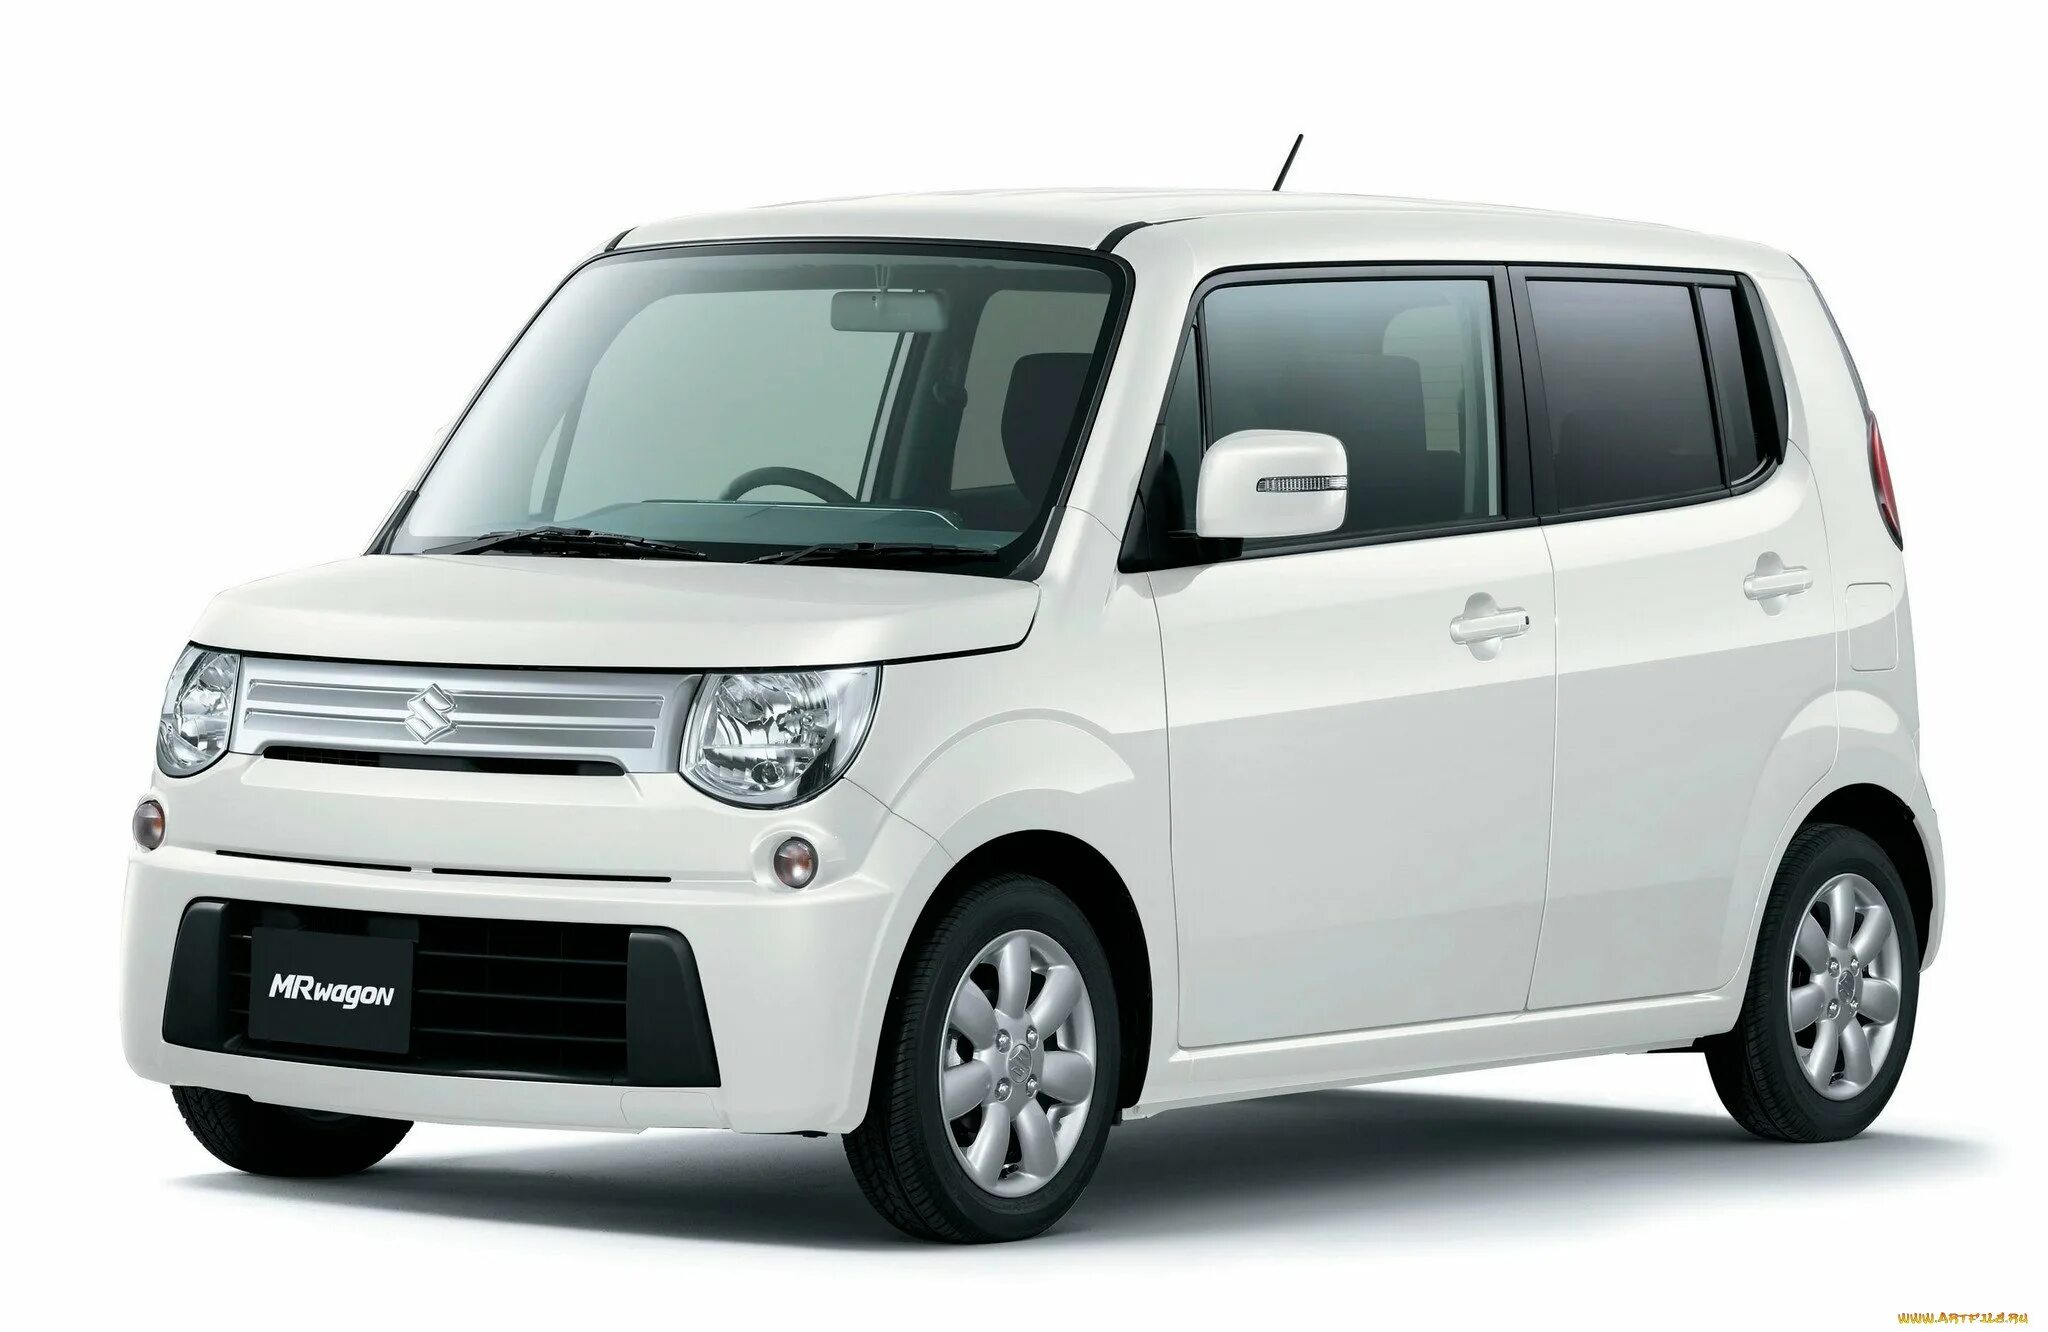 Купить авто в японии самому без посредников. Suzuki Mr Wagon (3g). Suzuki Mr Wagon mf33s 2011. Сузуки Кей кар 4вд. Suzuki Wagon Mr 3.